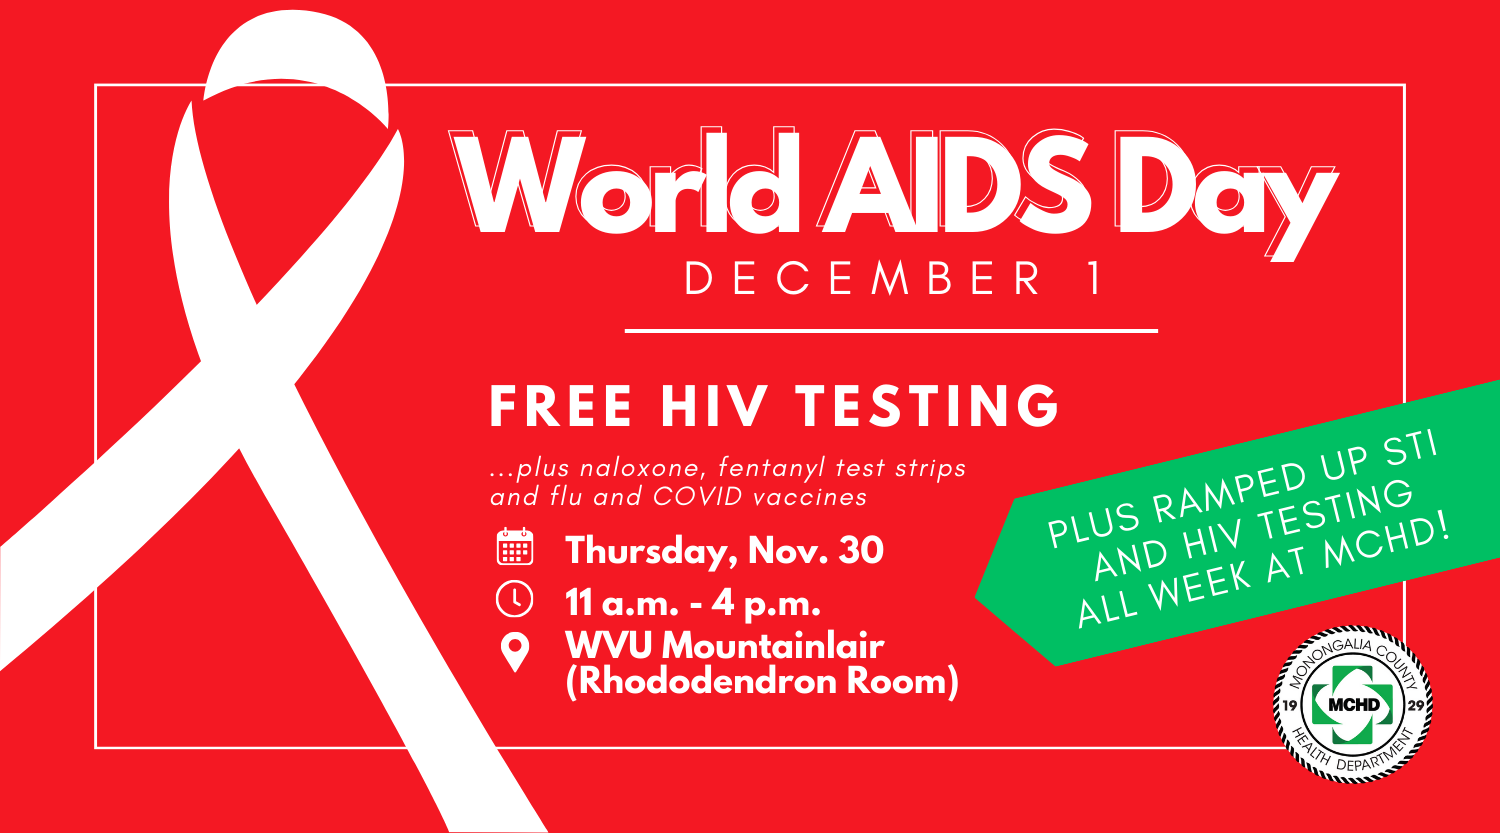 MCHD emphasizes STI testing this week for World AIDS Day